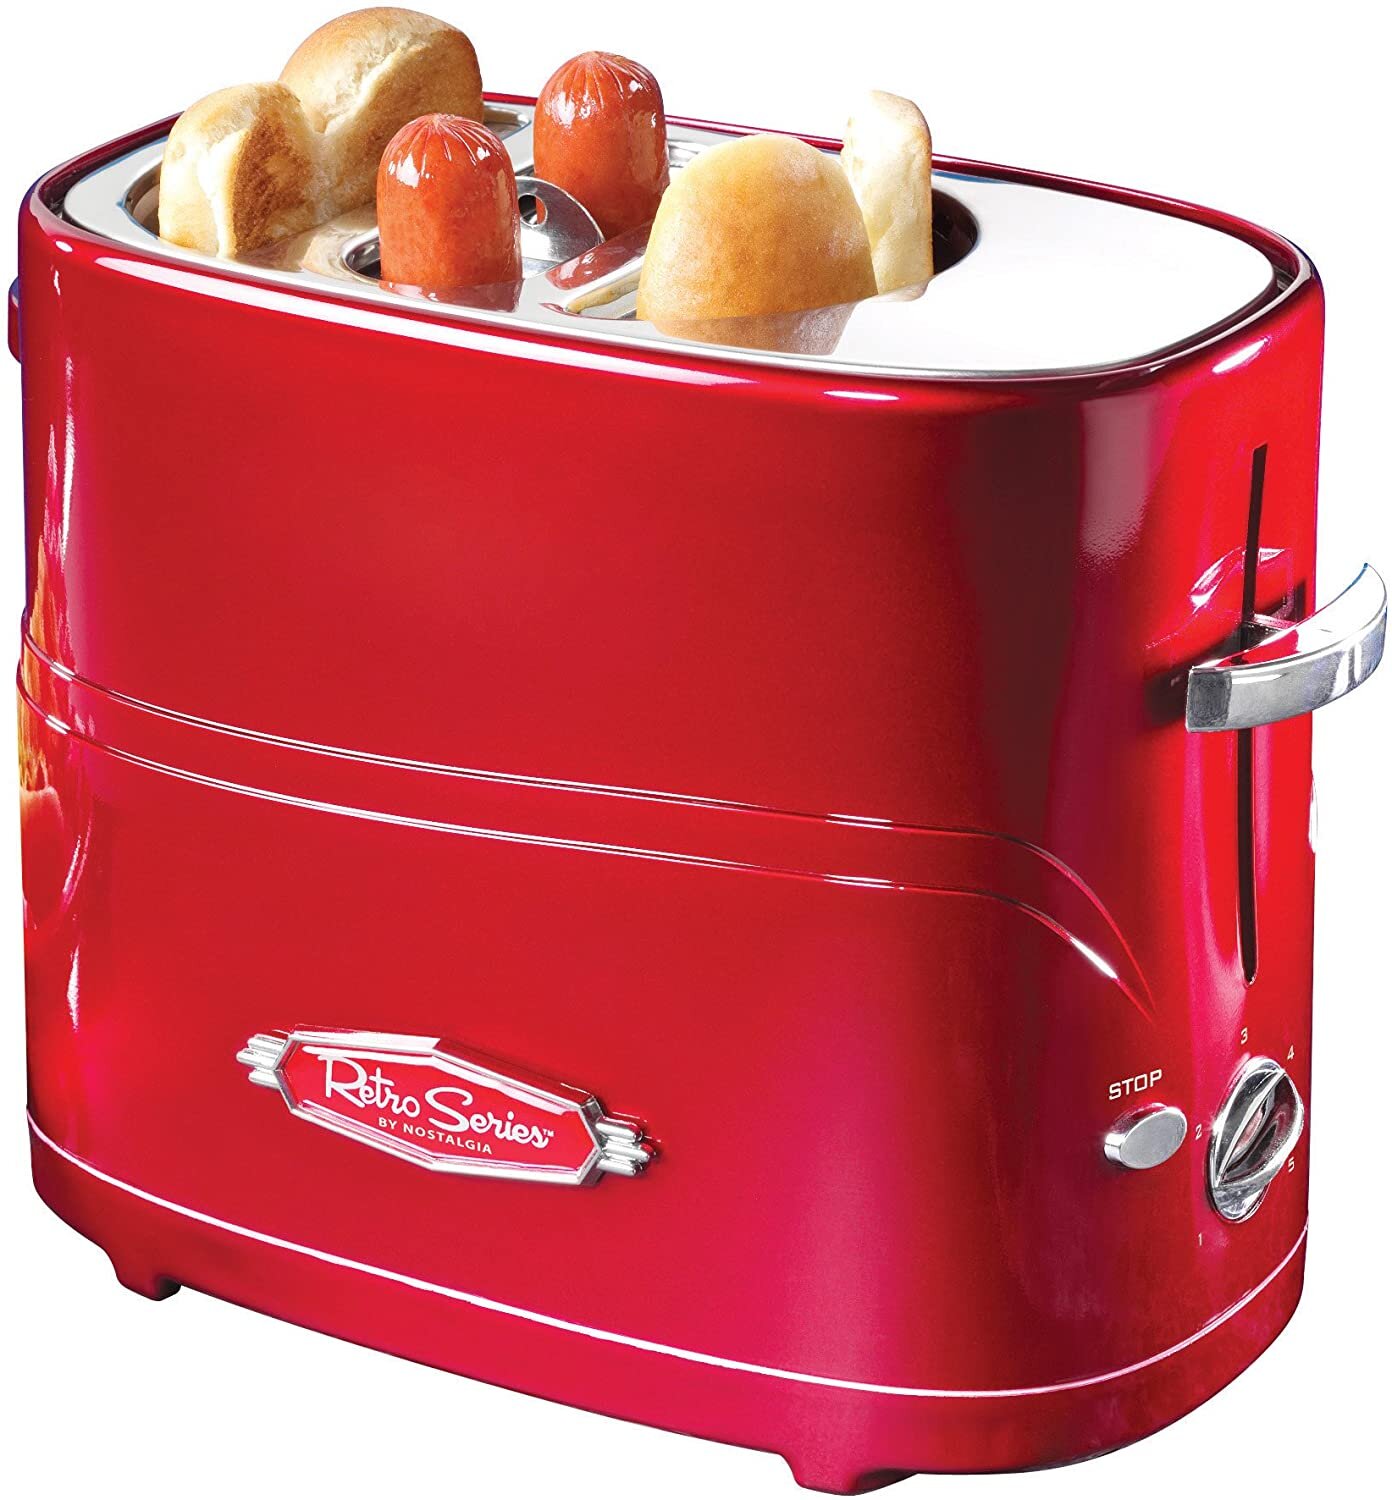 https://images.squarespace-cdn.com/content/v1/575ef1b97da24fd757acb056/1621630090214-VSETZEZ7X17MGGZDN1SE/Cool+Kitchen+Tools+on+Amazon+hot+dog+toaster.jpg